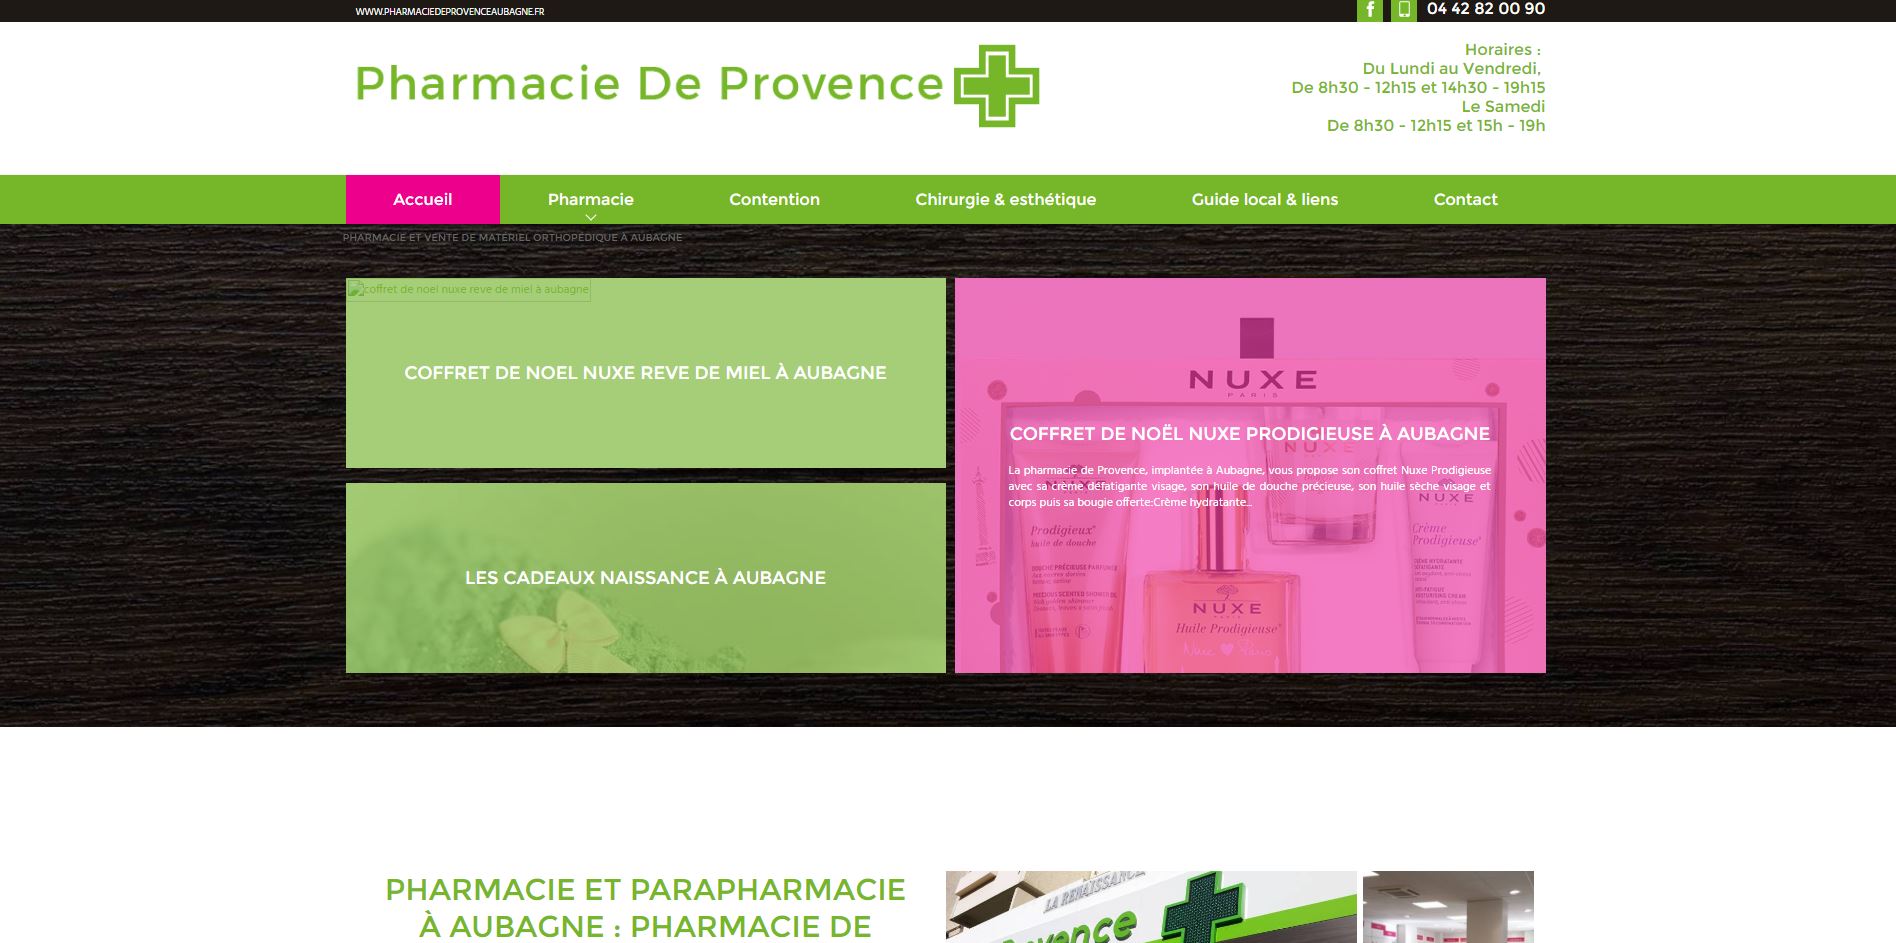 Parapharmacie à Aubagne – Pharmacie de Provence